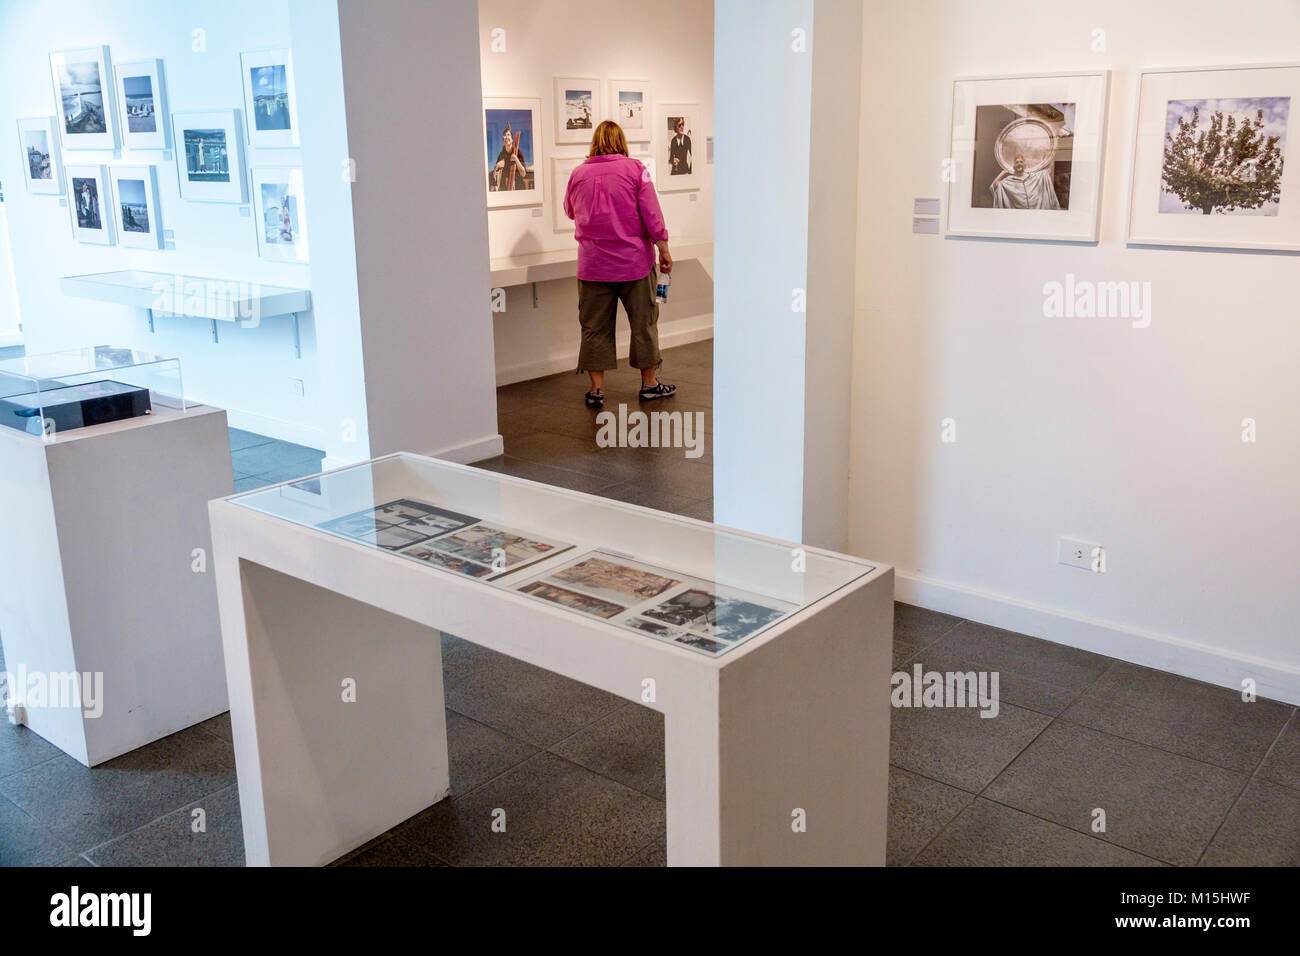 Robert capa exhibition fotografías e imágenes de alta resolución - Alamy